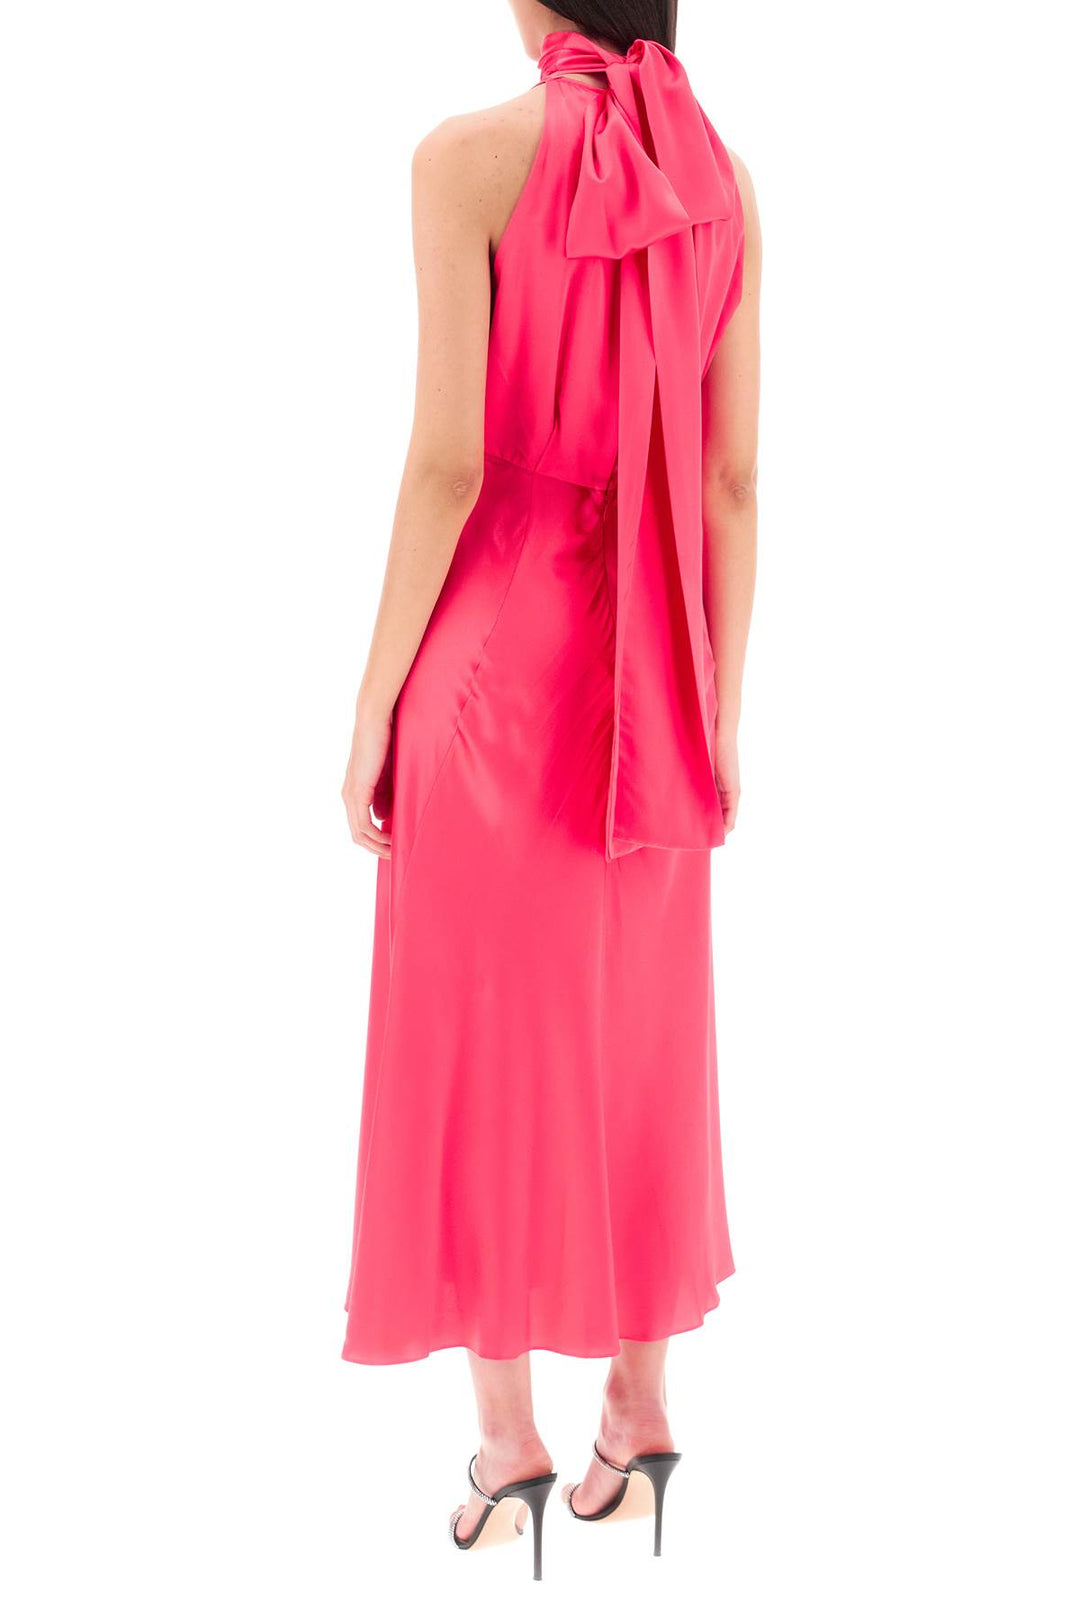 Saloni 'Michelle' Satin Dress   Rosa